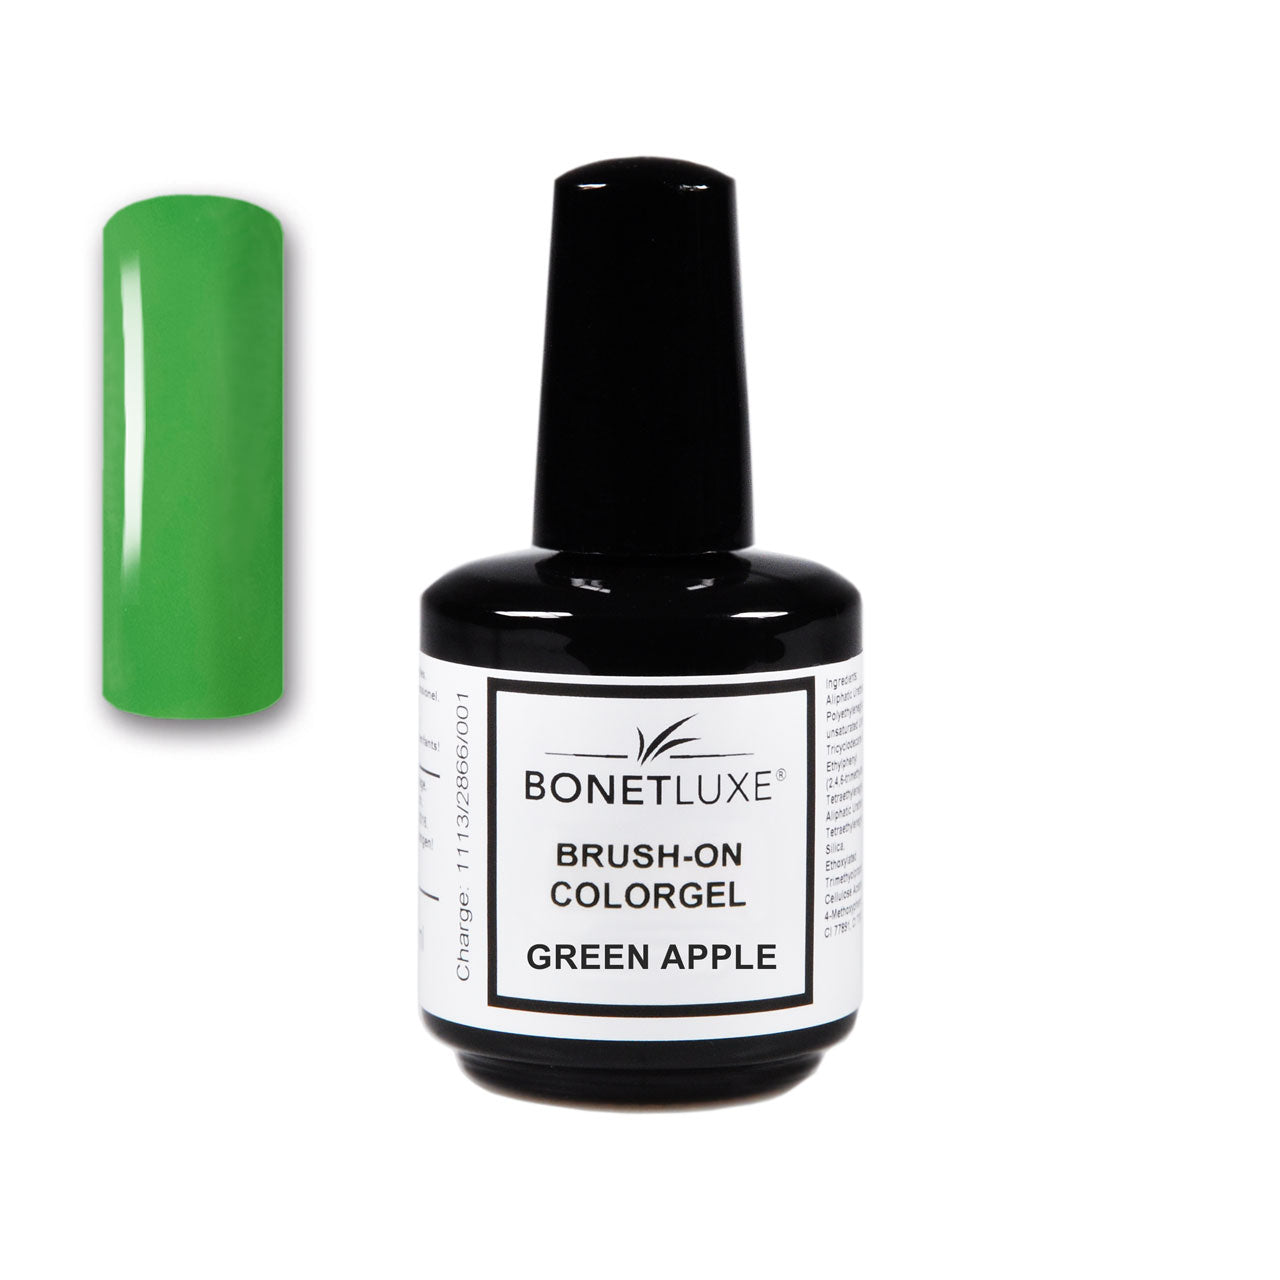 Bonetluxe Brush-On Colorgel Green Apple